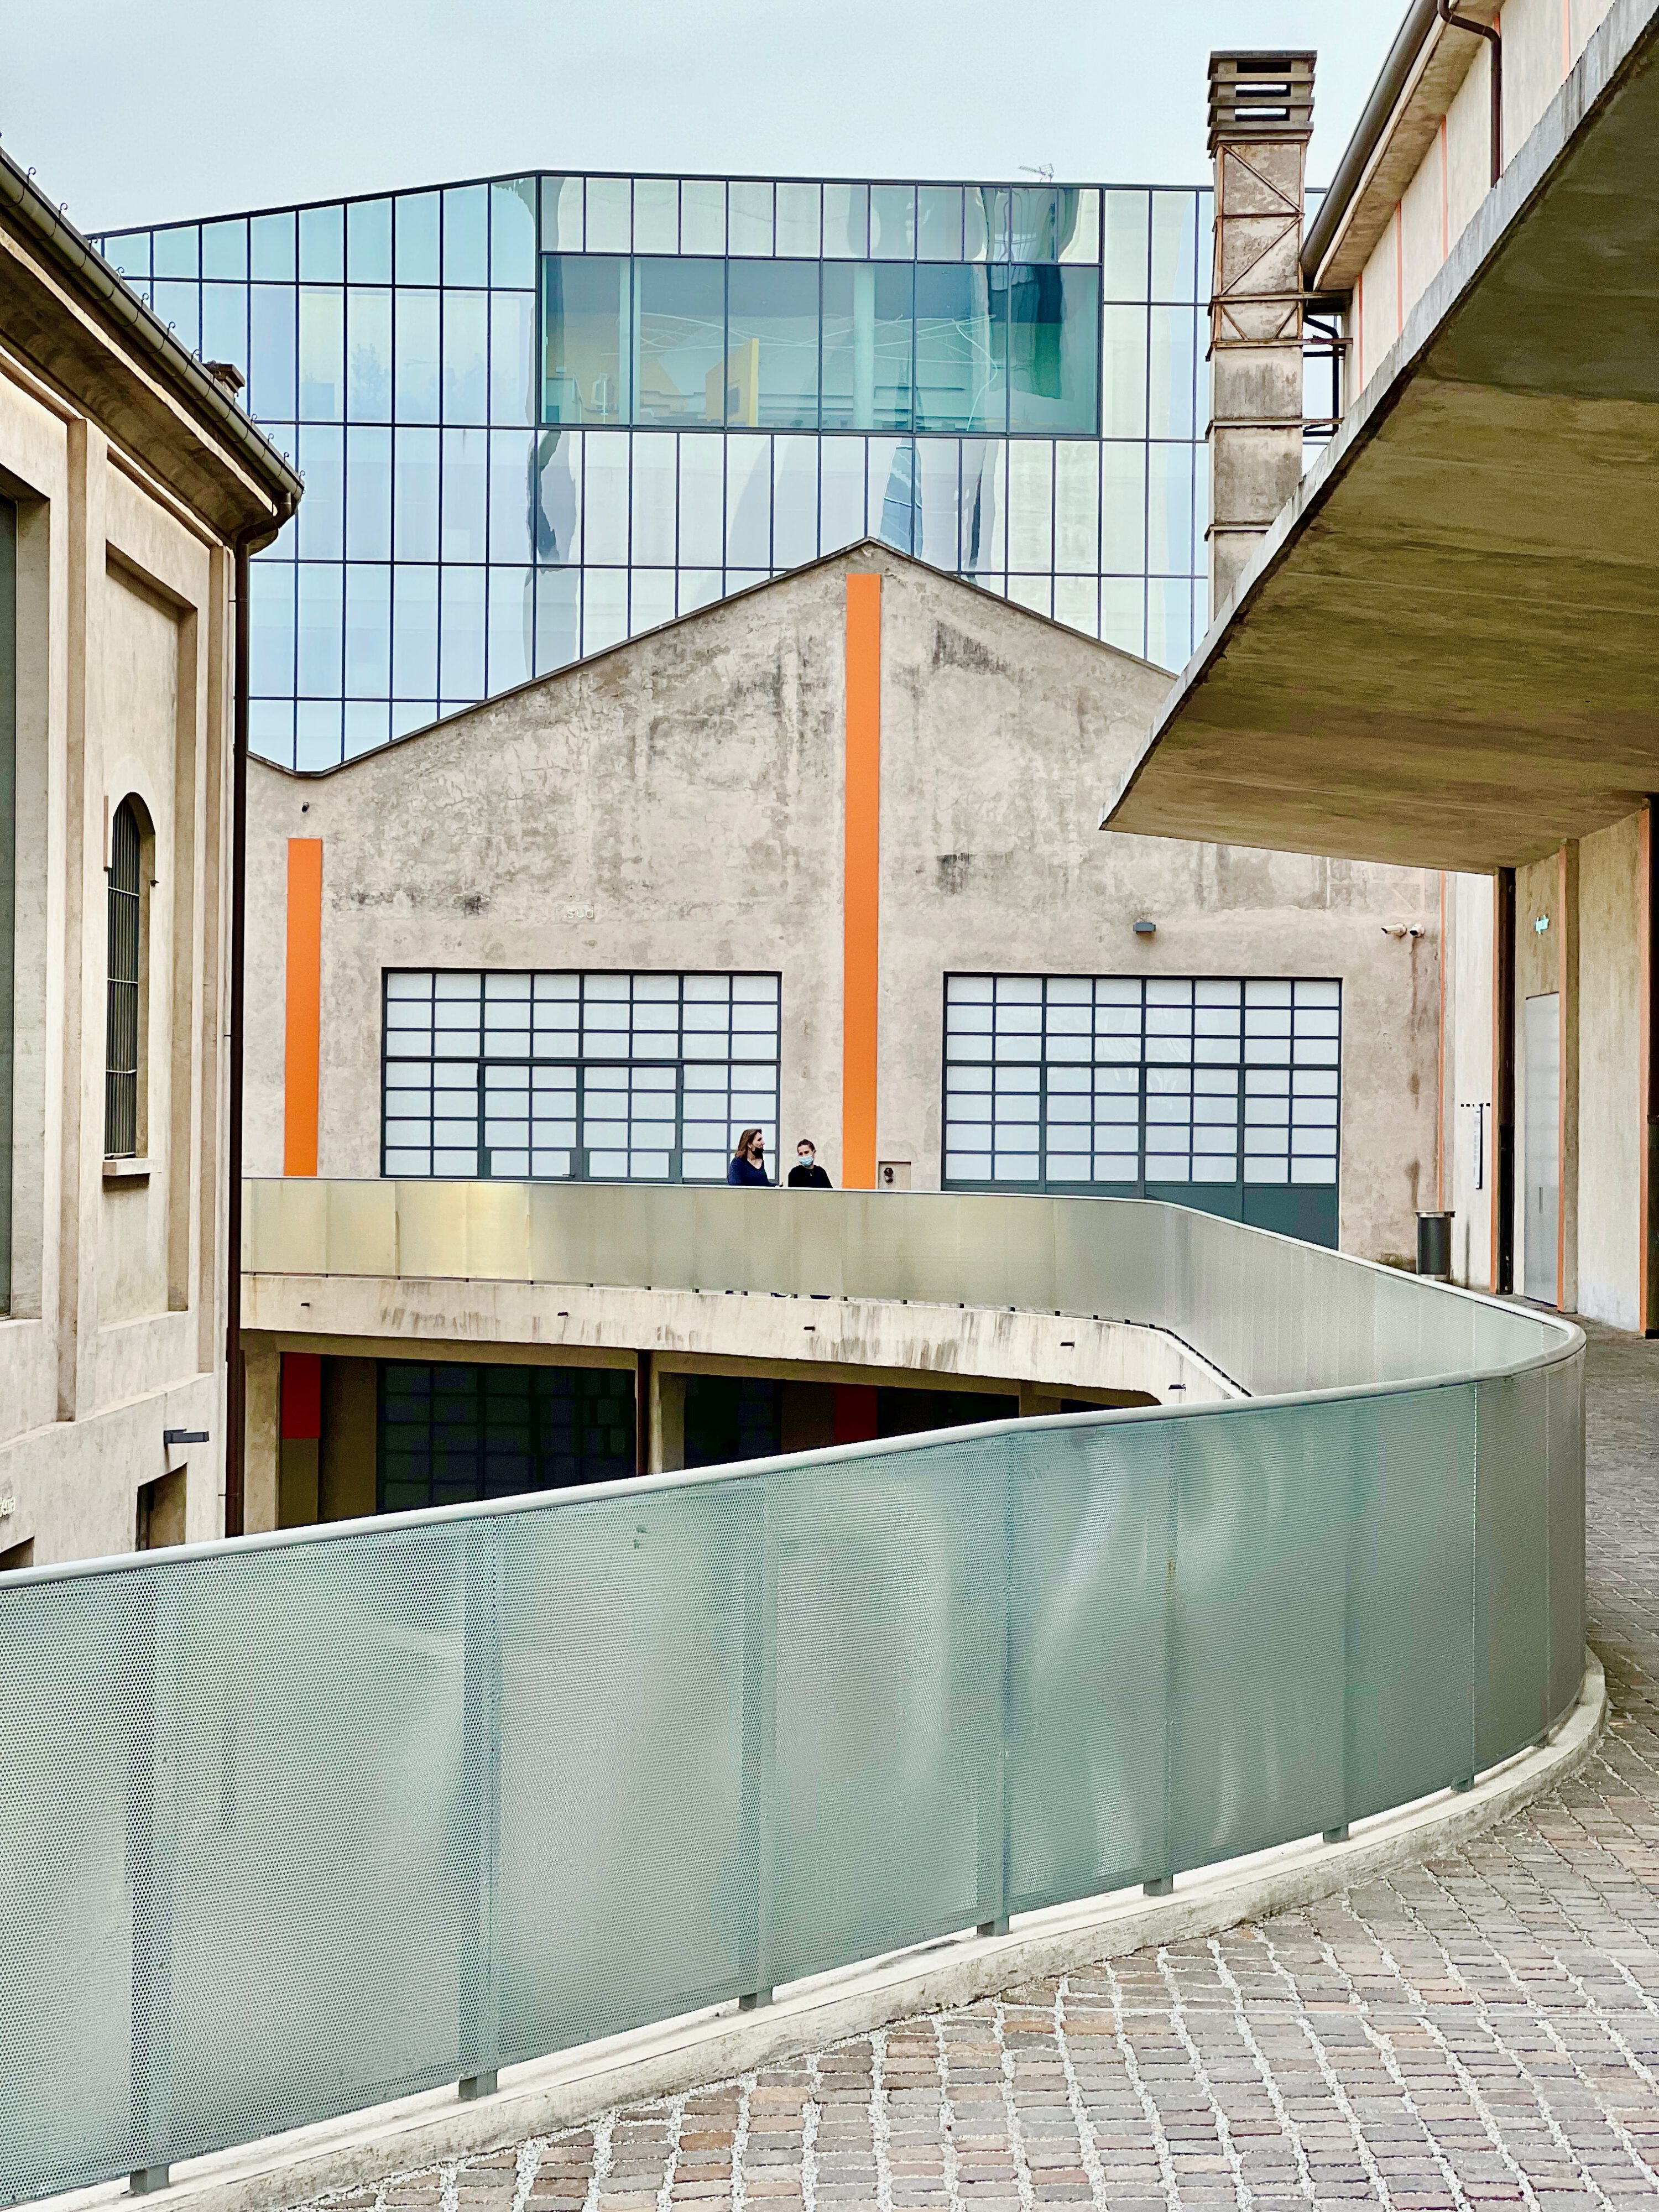 Fondazione Prada in Milan by Dutch architect Rem Koolhaas